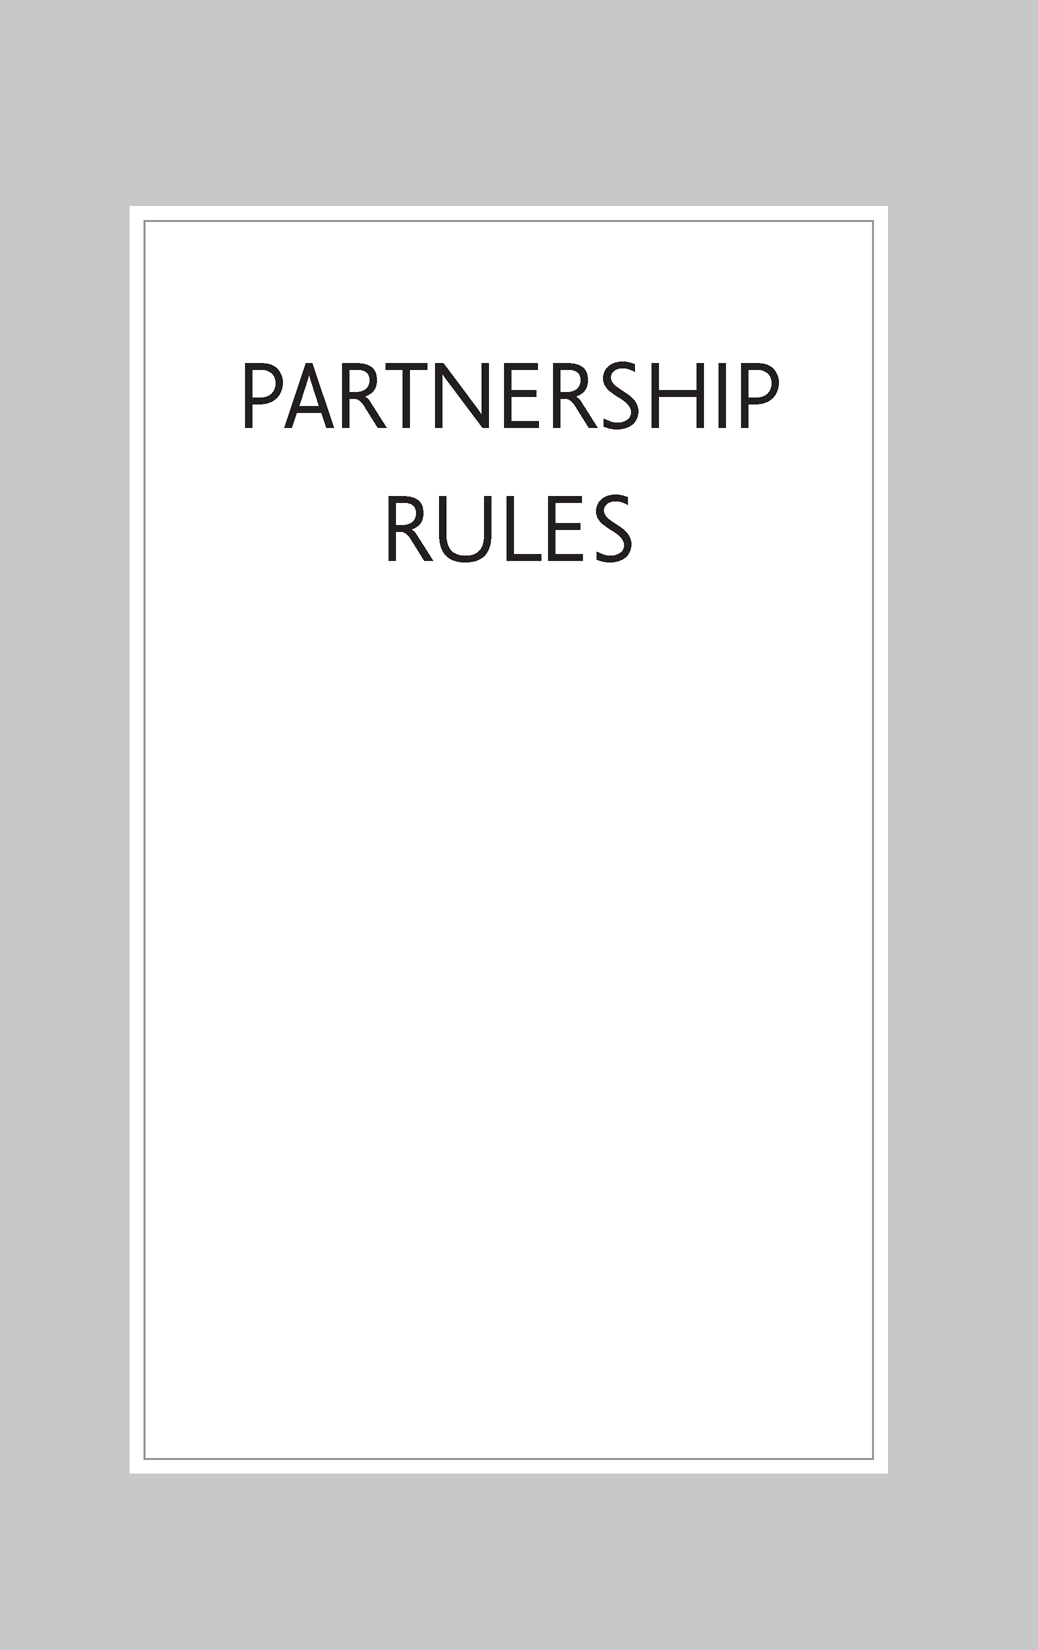 PARTNERSHIP RULES